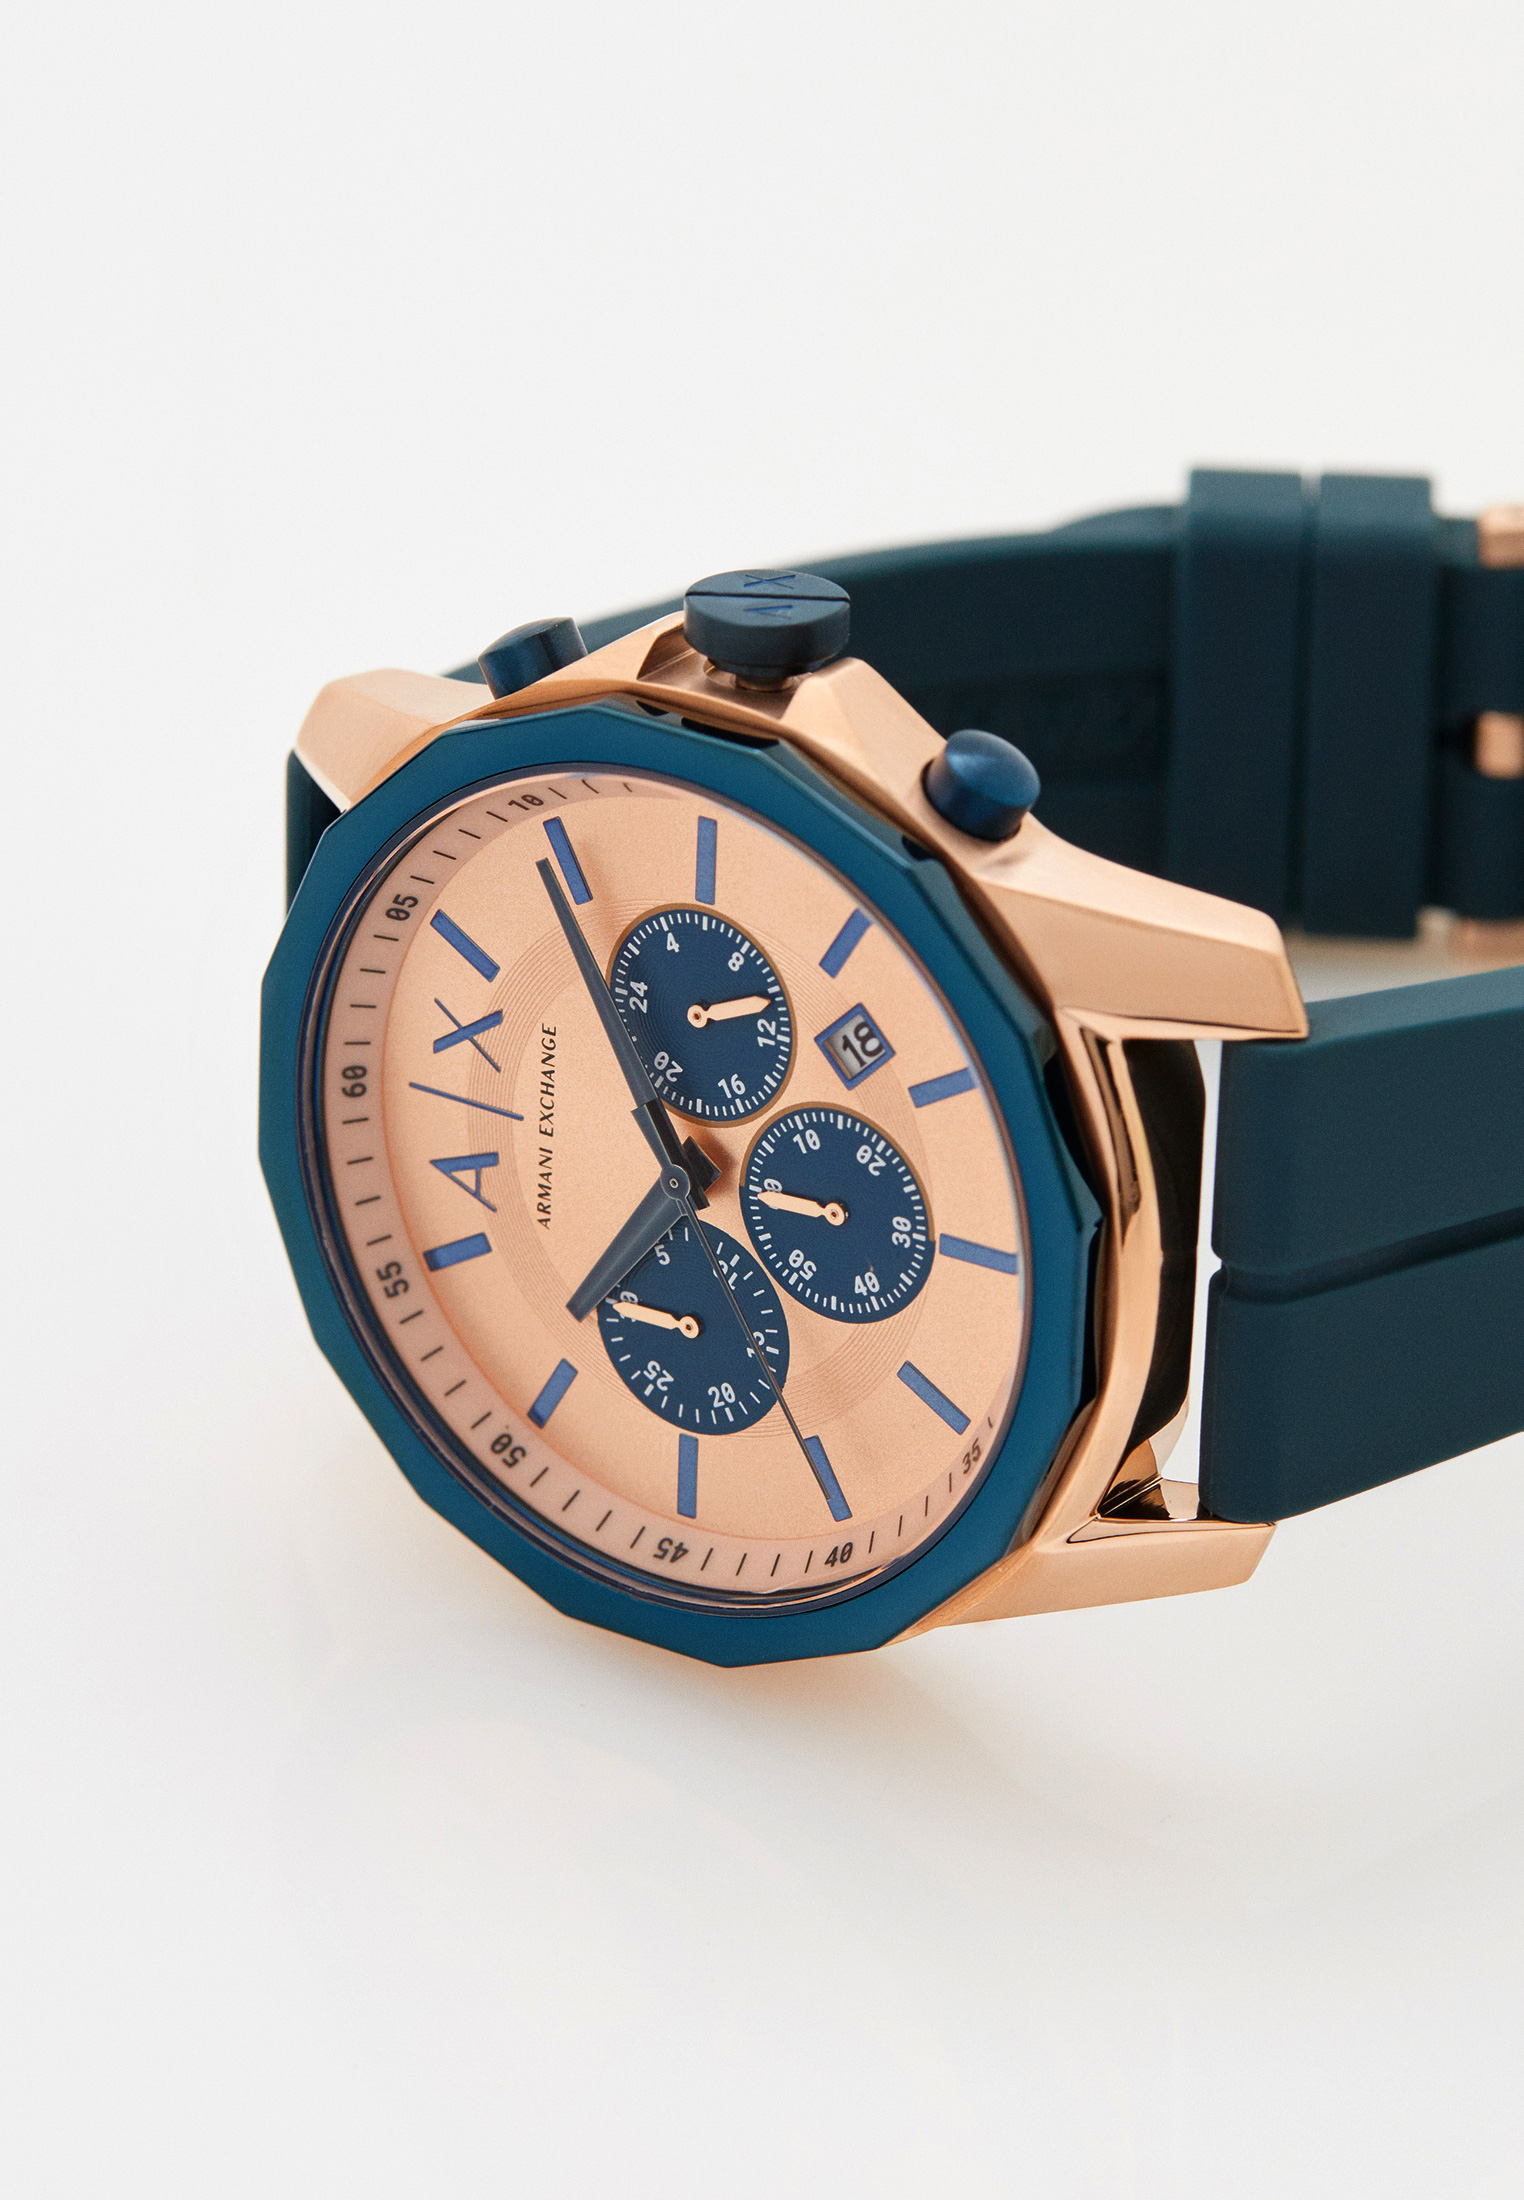 Часы Armani Exchange AX1730, цвет: синий, RTLACH953001 — купить в  интернет-магазине Lamoda